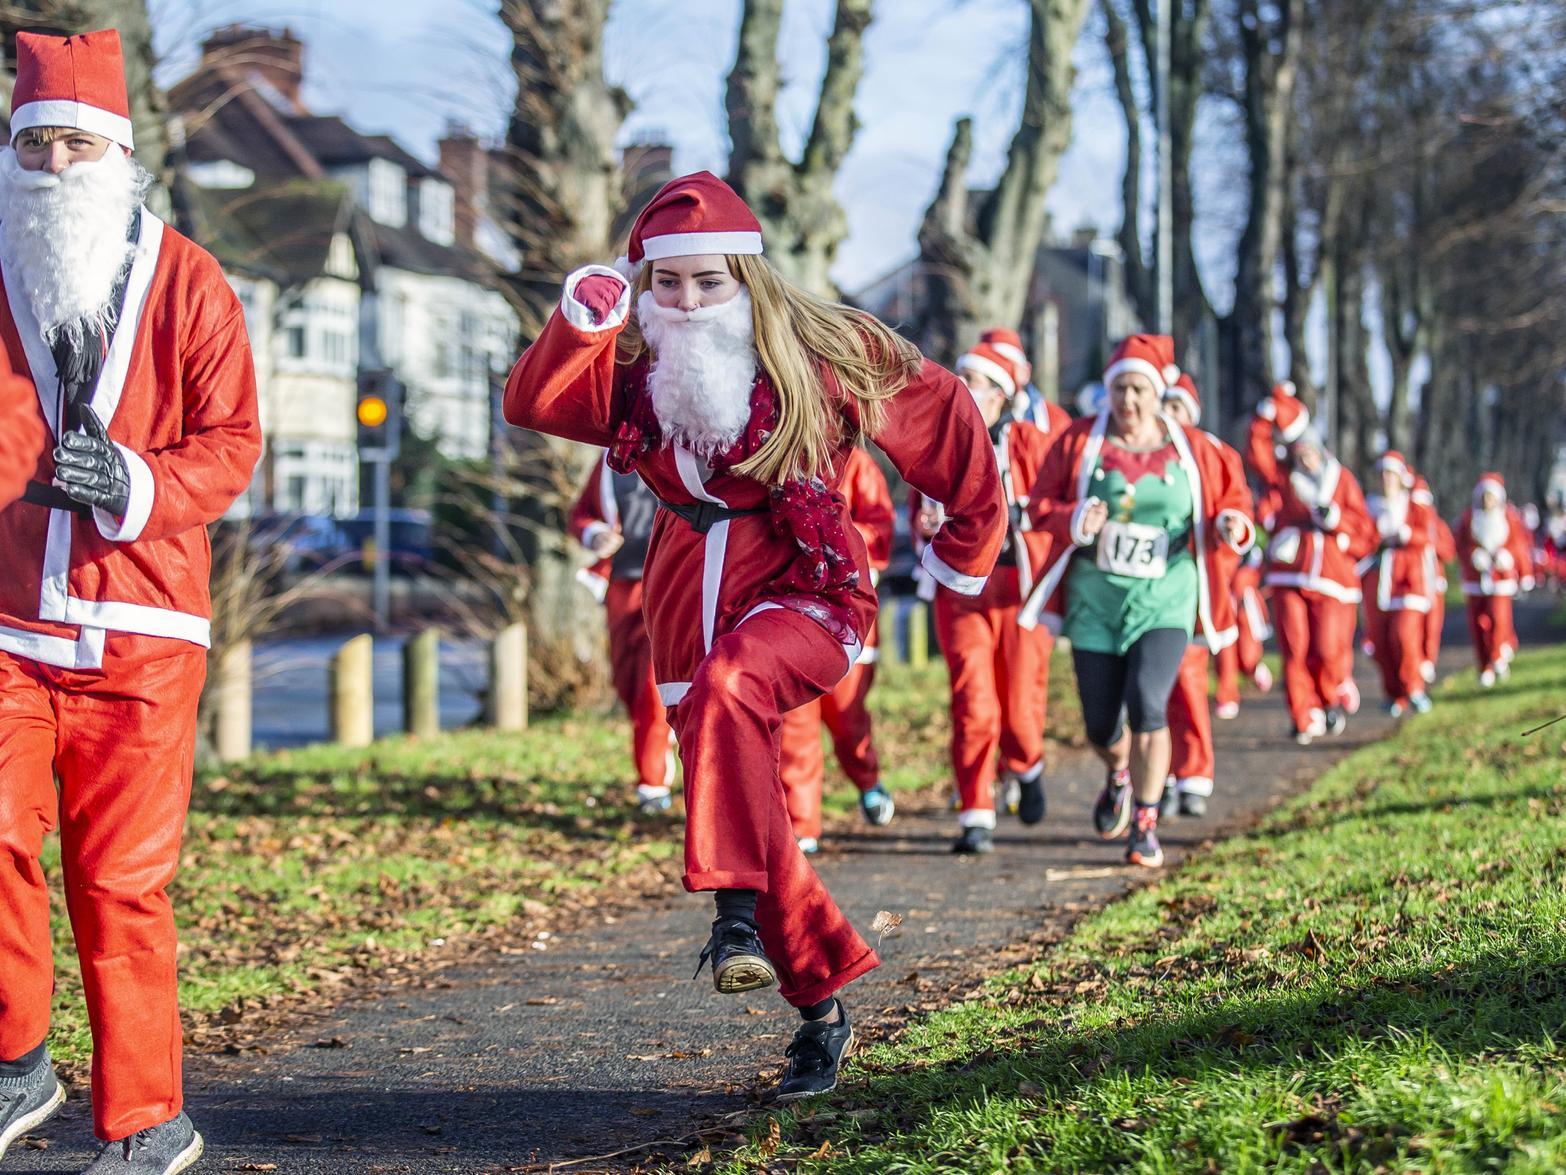 Santa Fun Run at the Racecourse, Northampton